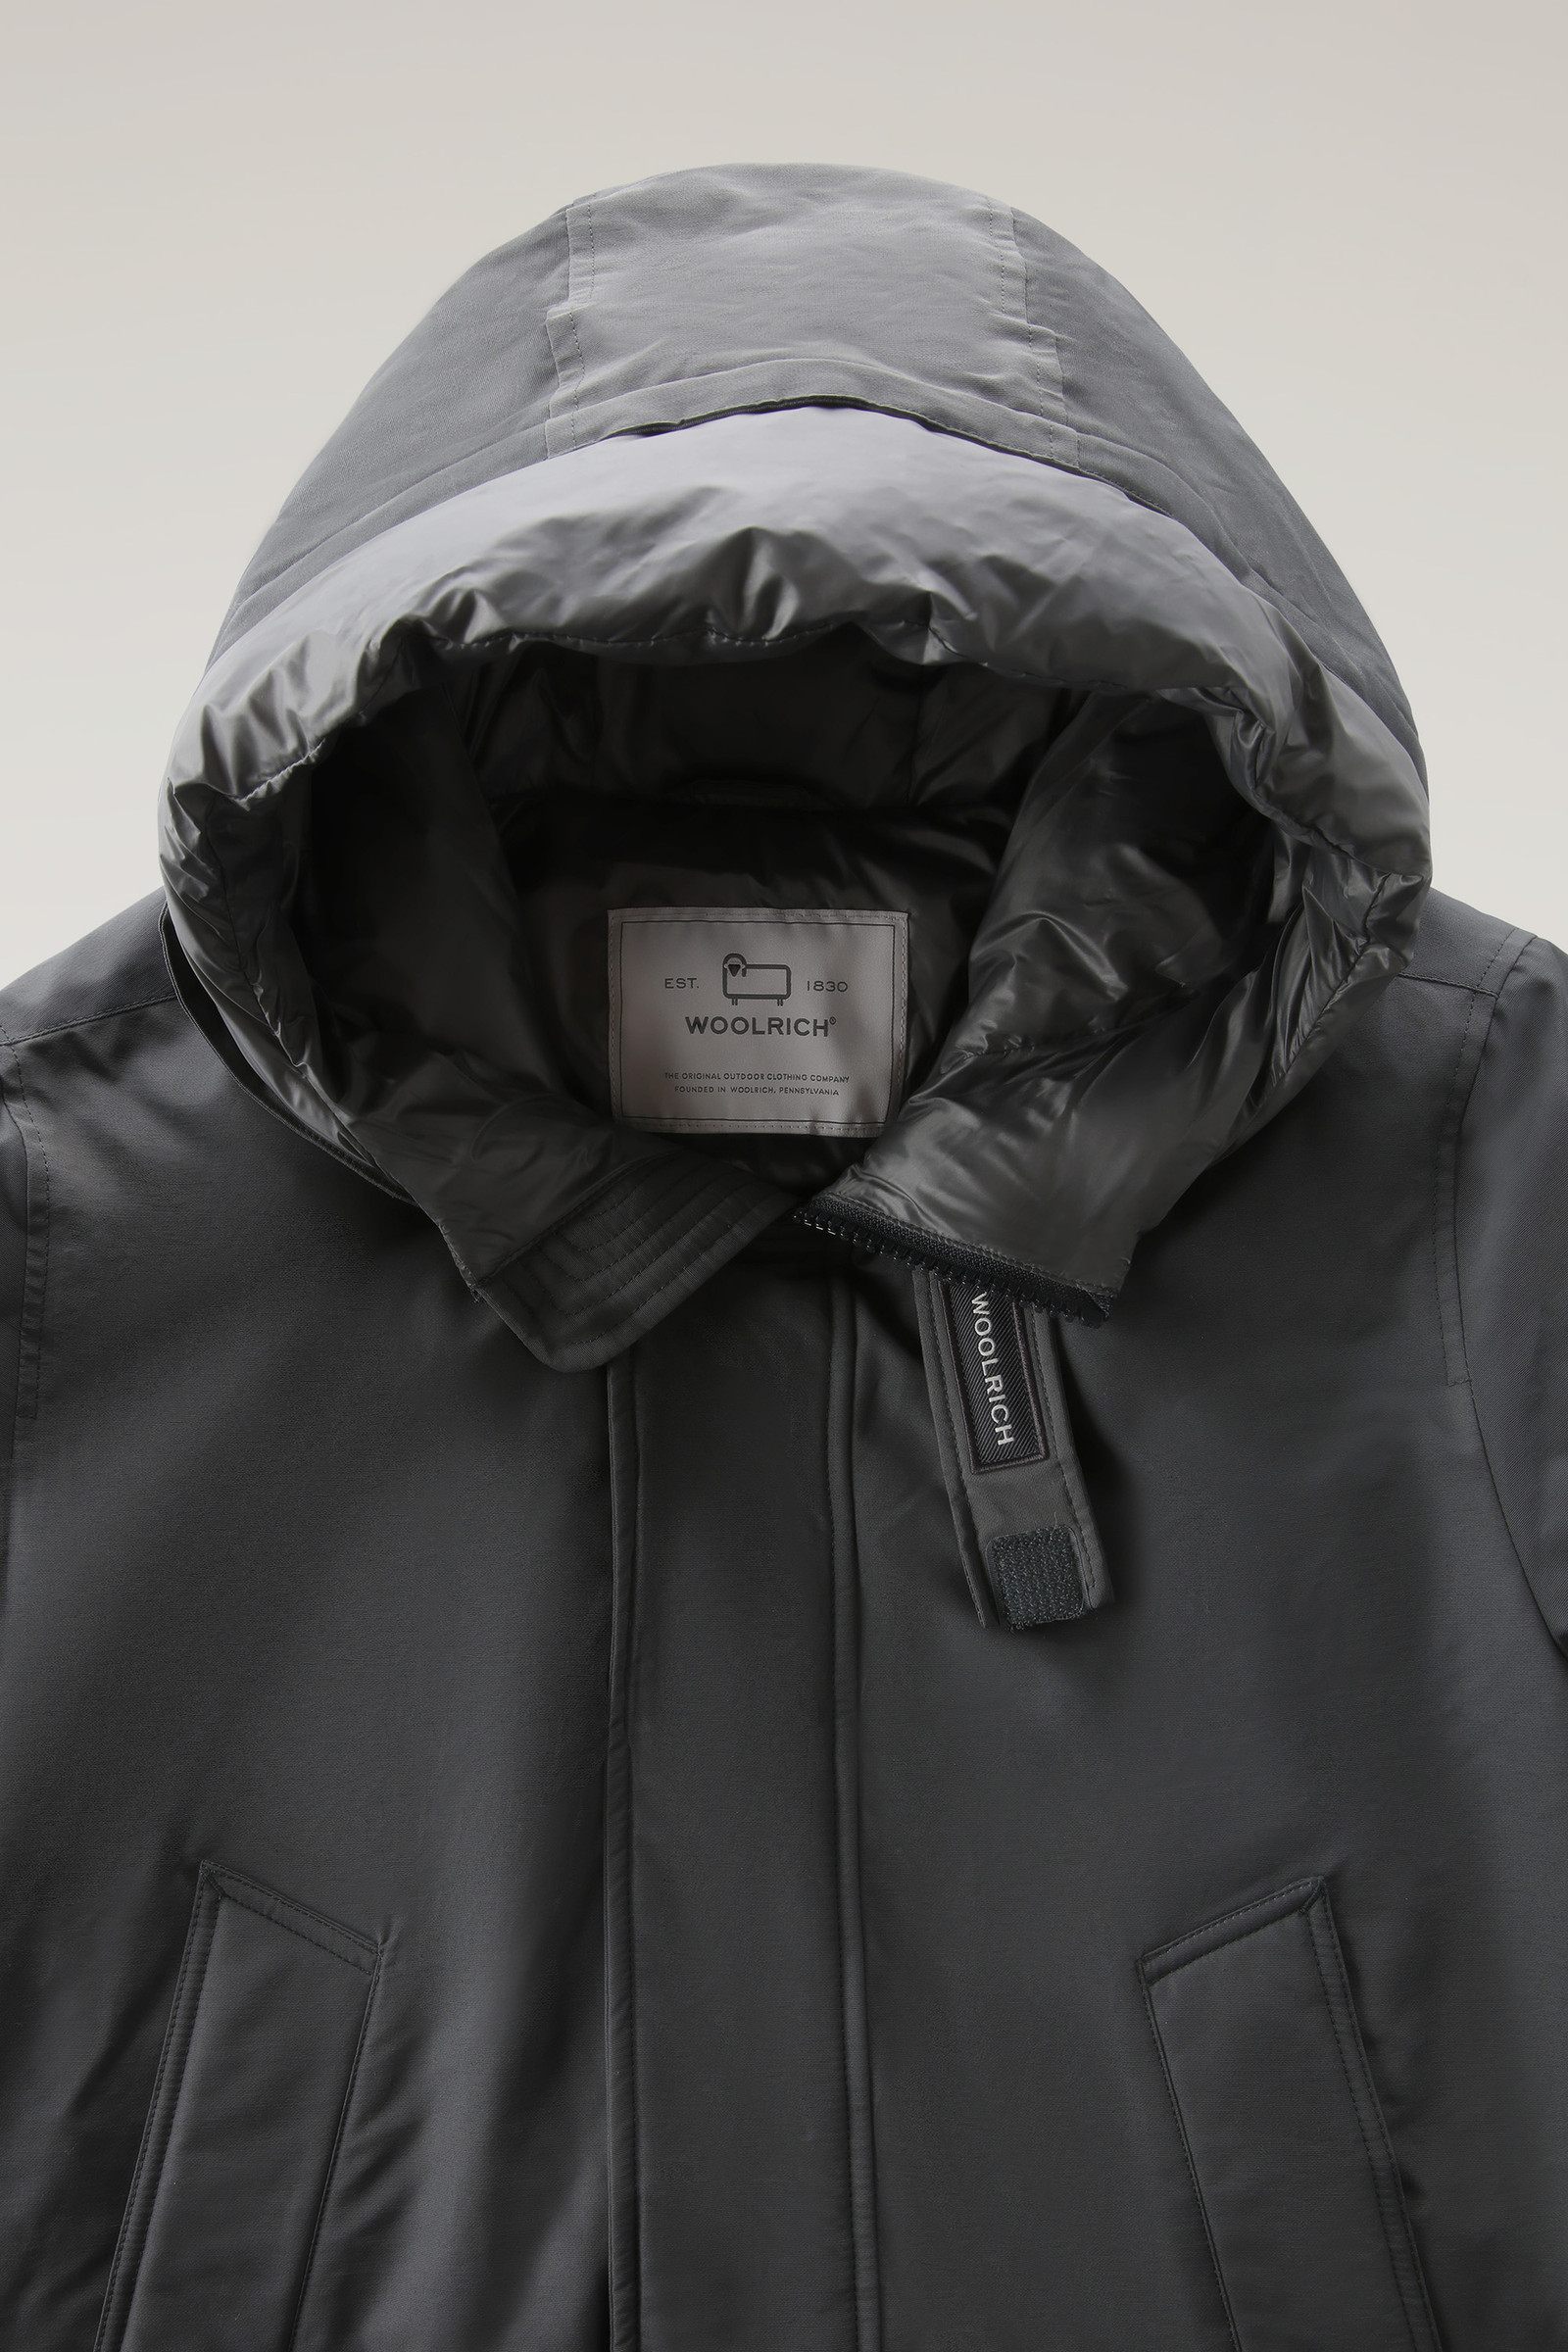 WOOLRICH WJOU0071 Gray Gore-Tex Infinium Down Jacket coat USA/S/EU/M gray